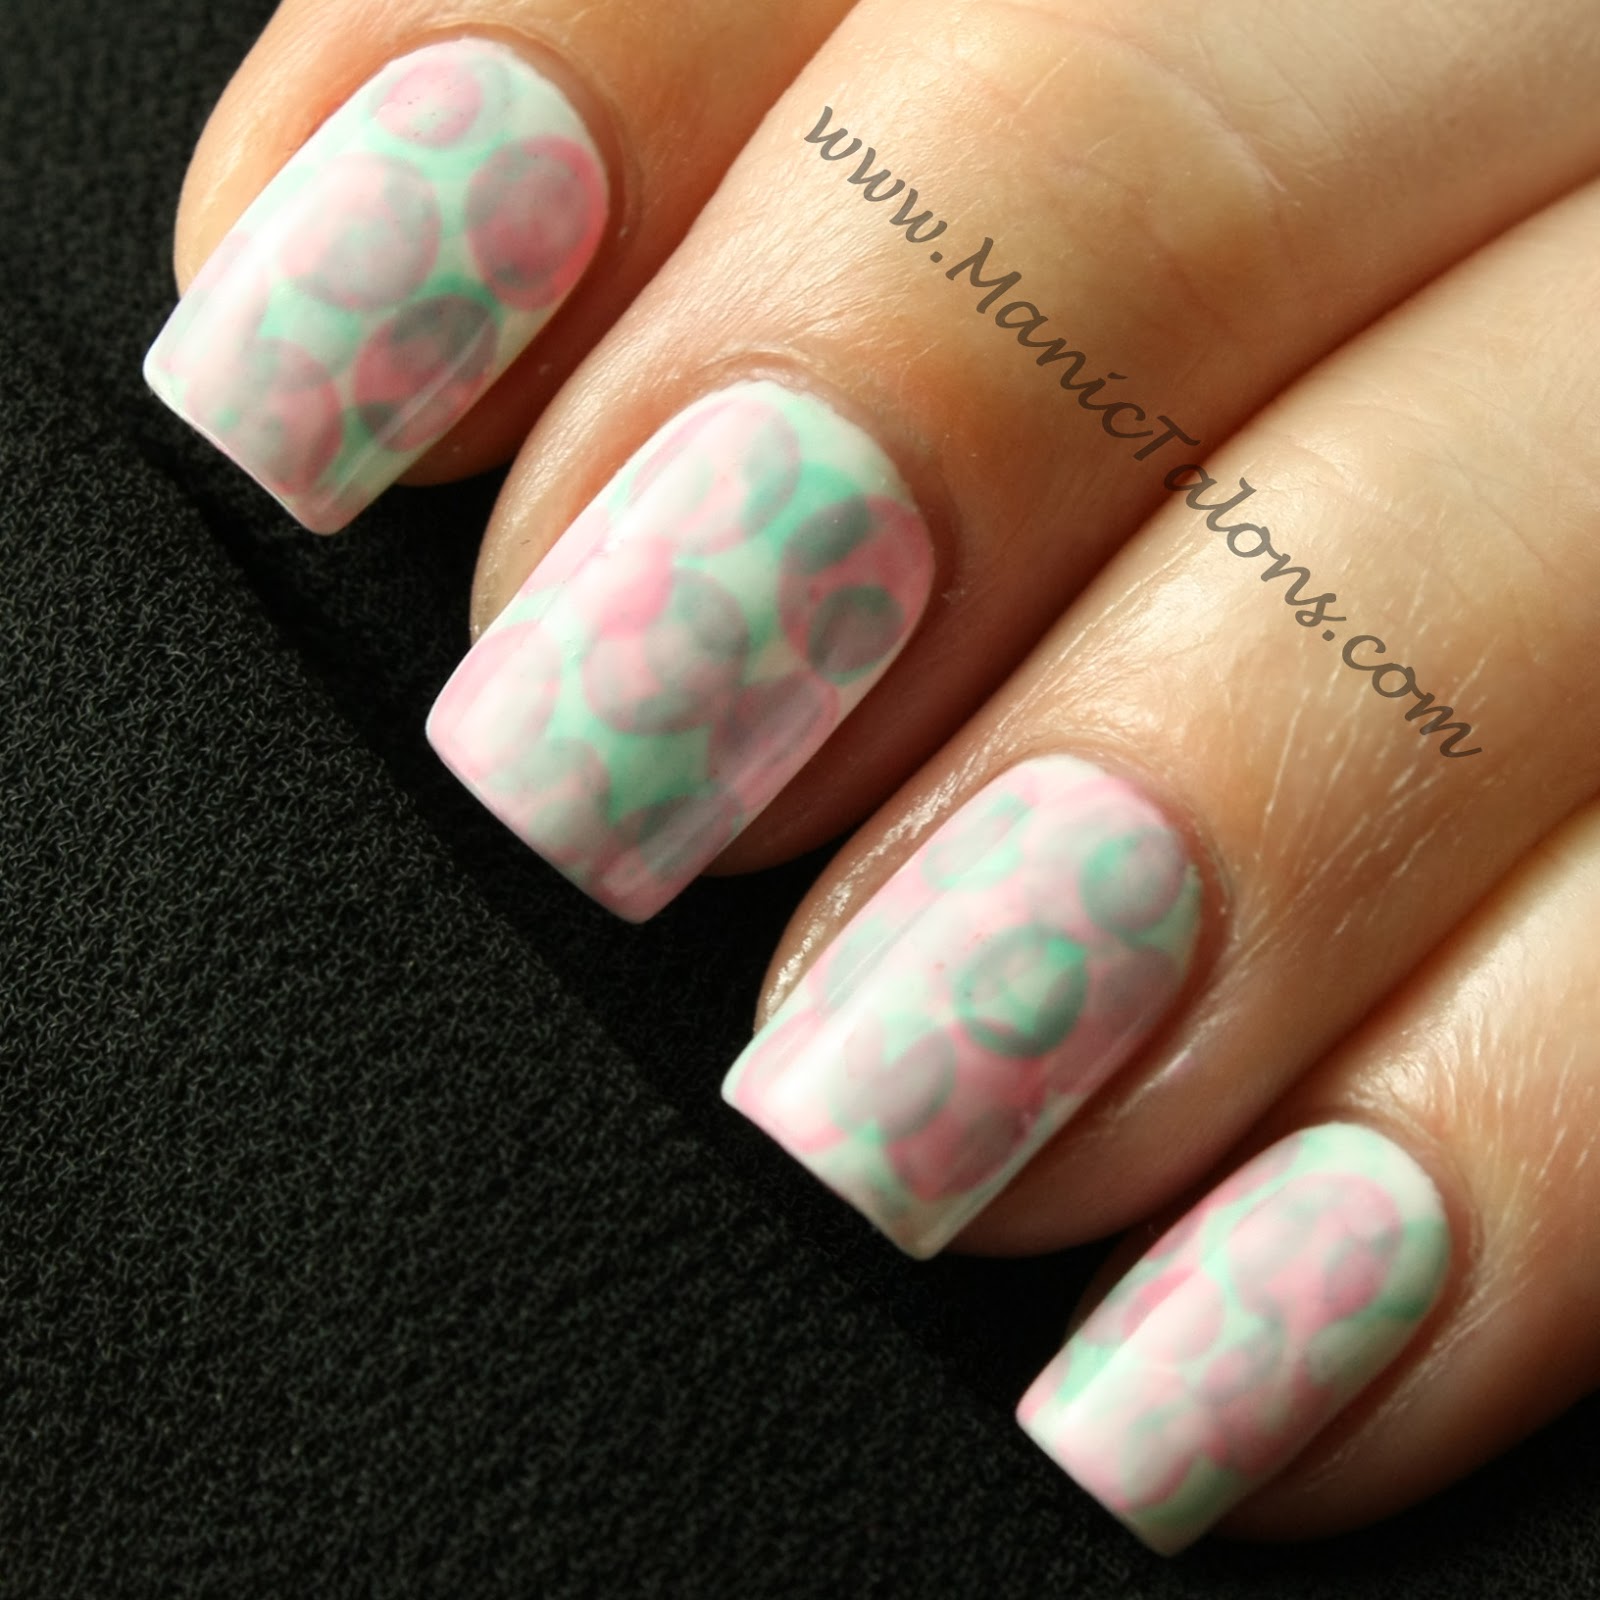 Latest nail art designs 2012 -2013 - Nail polish designs for girls